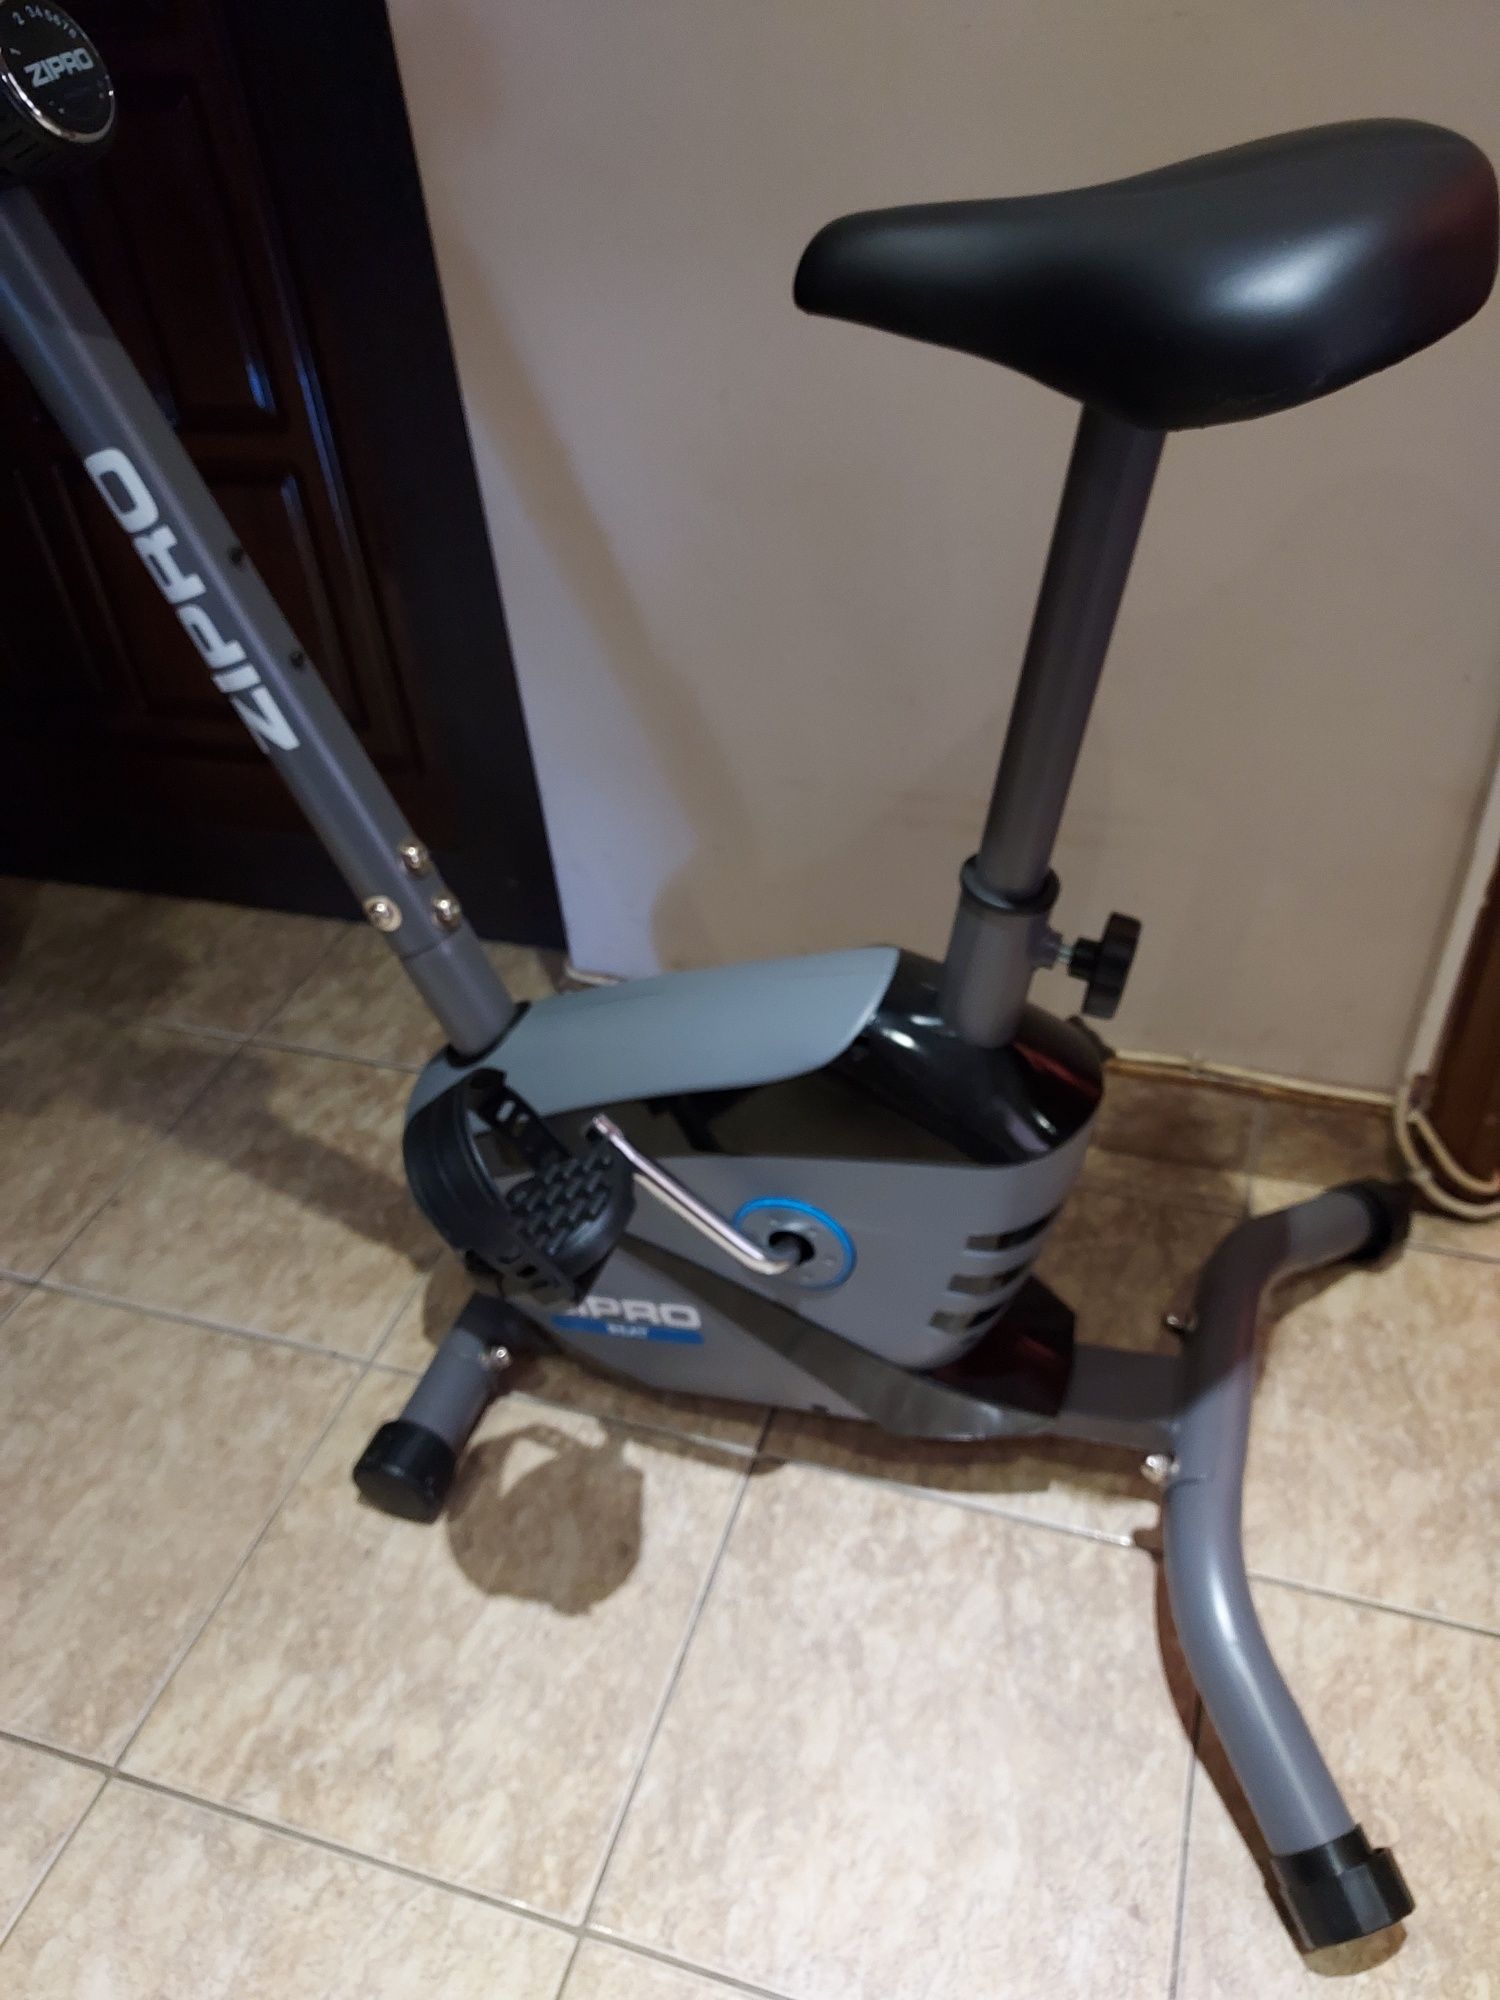 Bicicleta magnetica Zipro beat și aparat abdomene Vitalmaxx